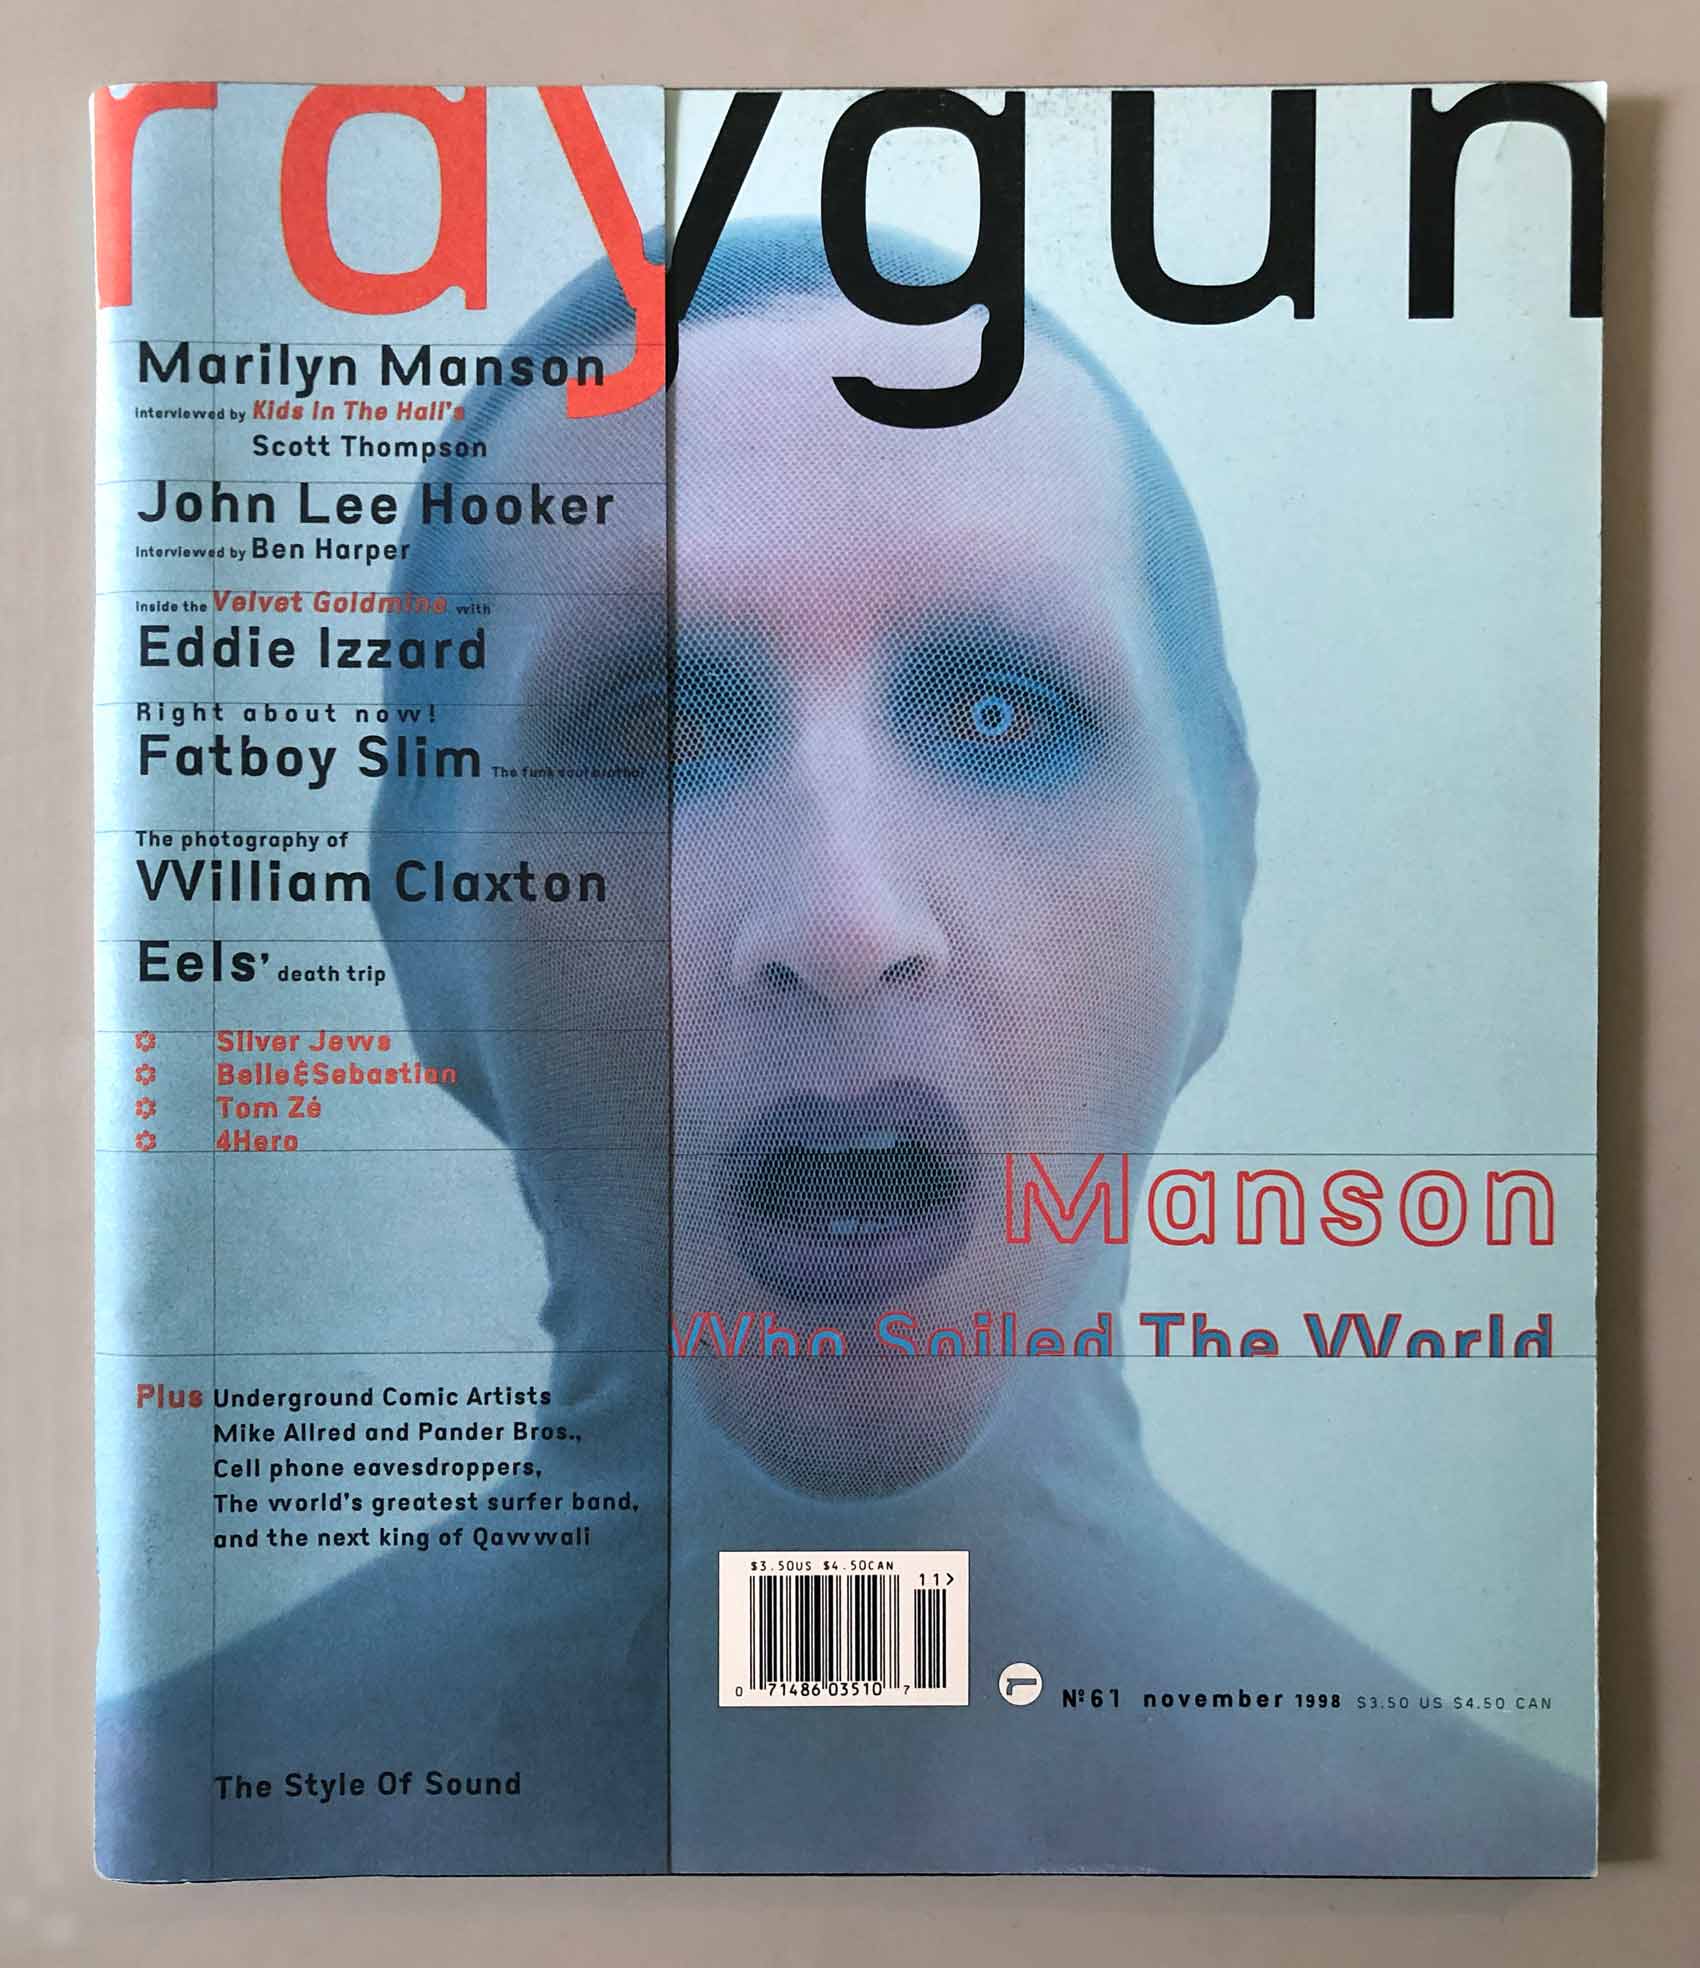 Raygun Magazine issue #61 cover